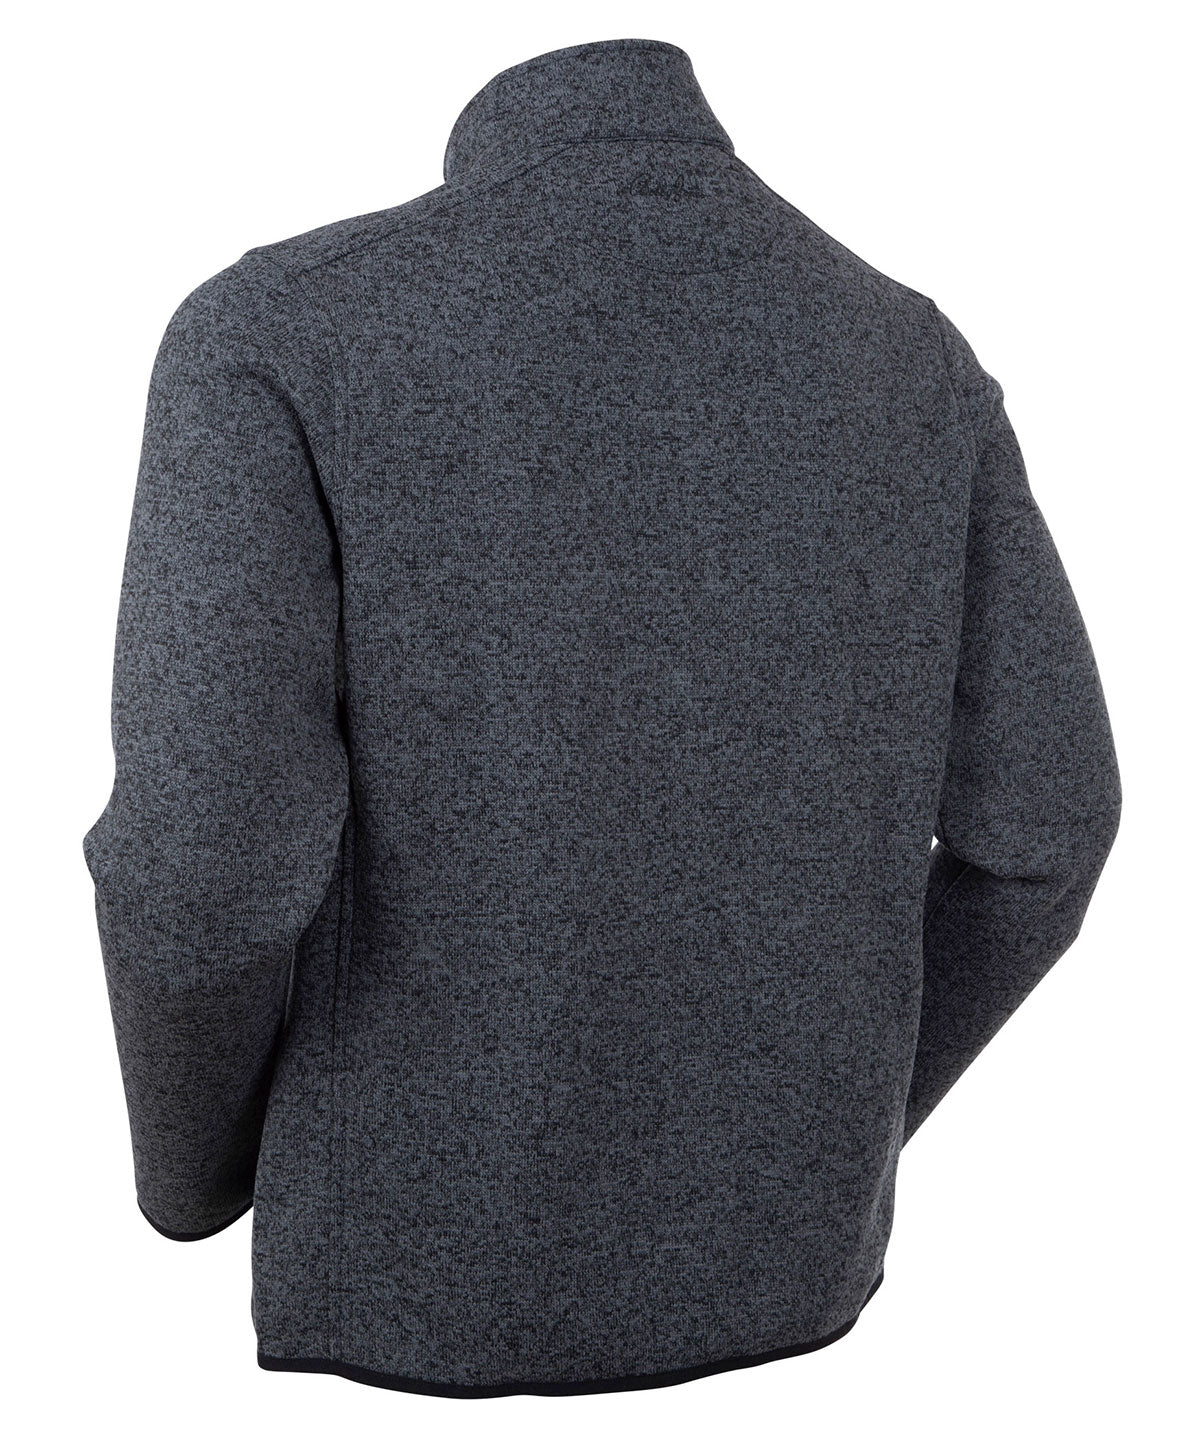 Heathered Quarter-Zip Performance Fleece Pullover